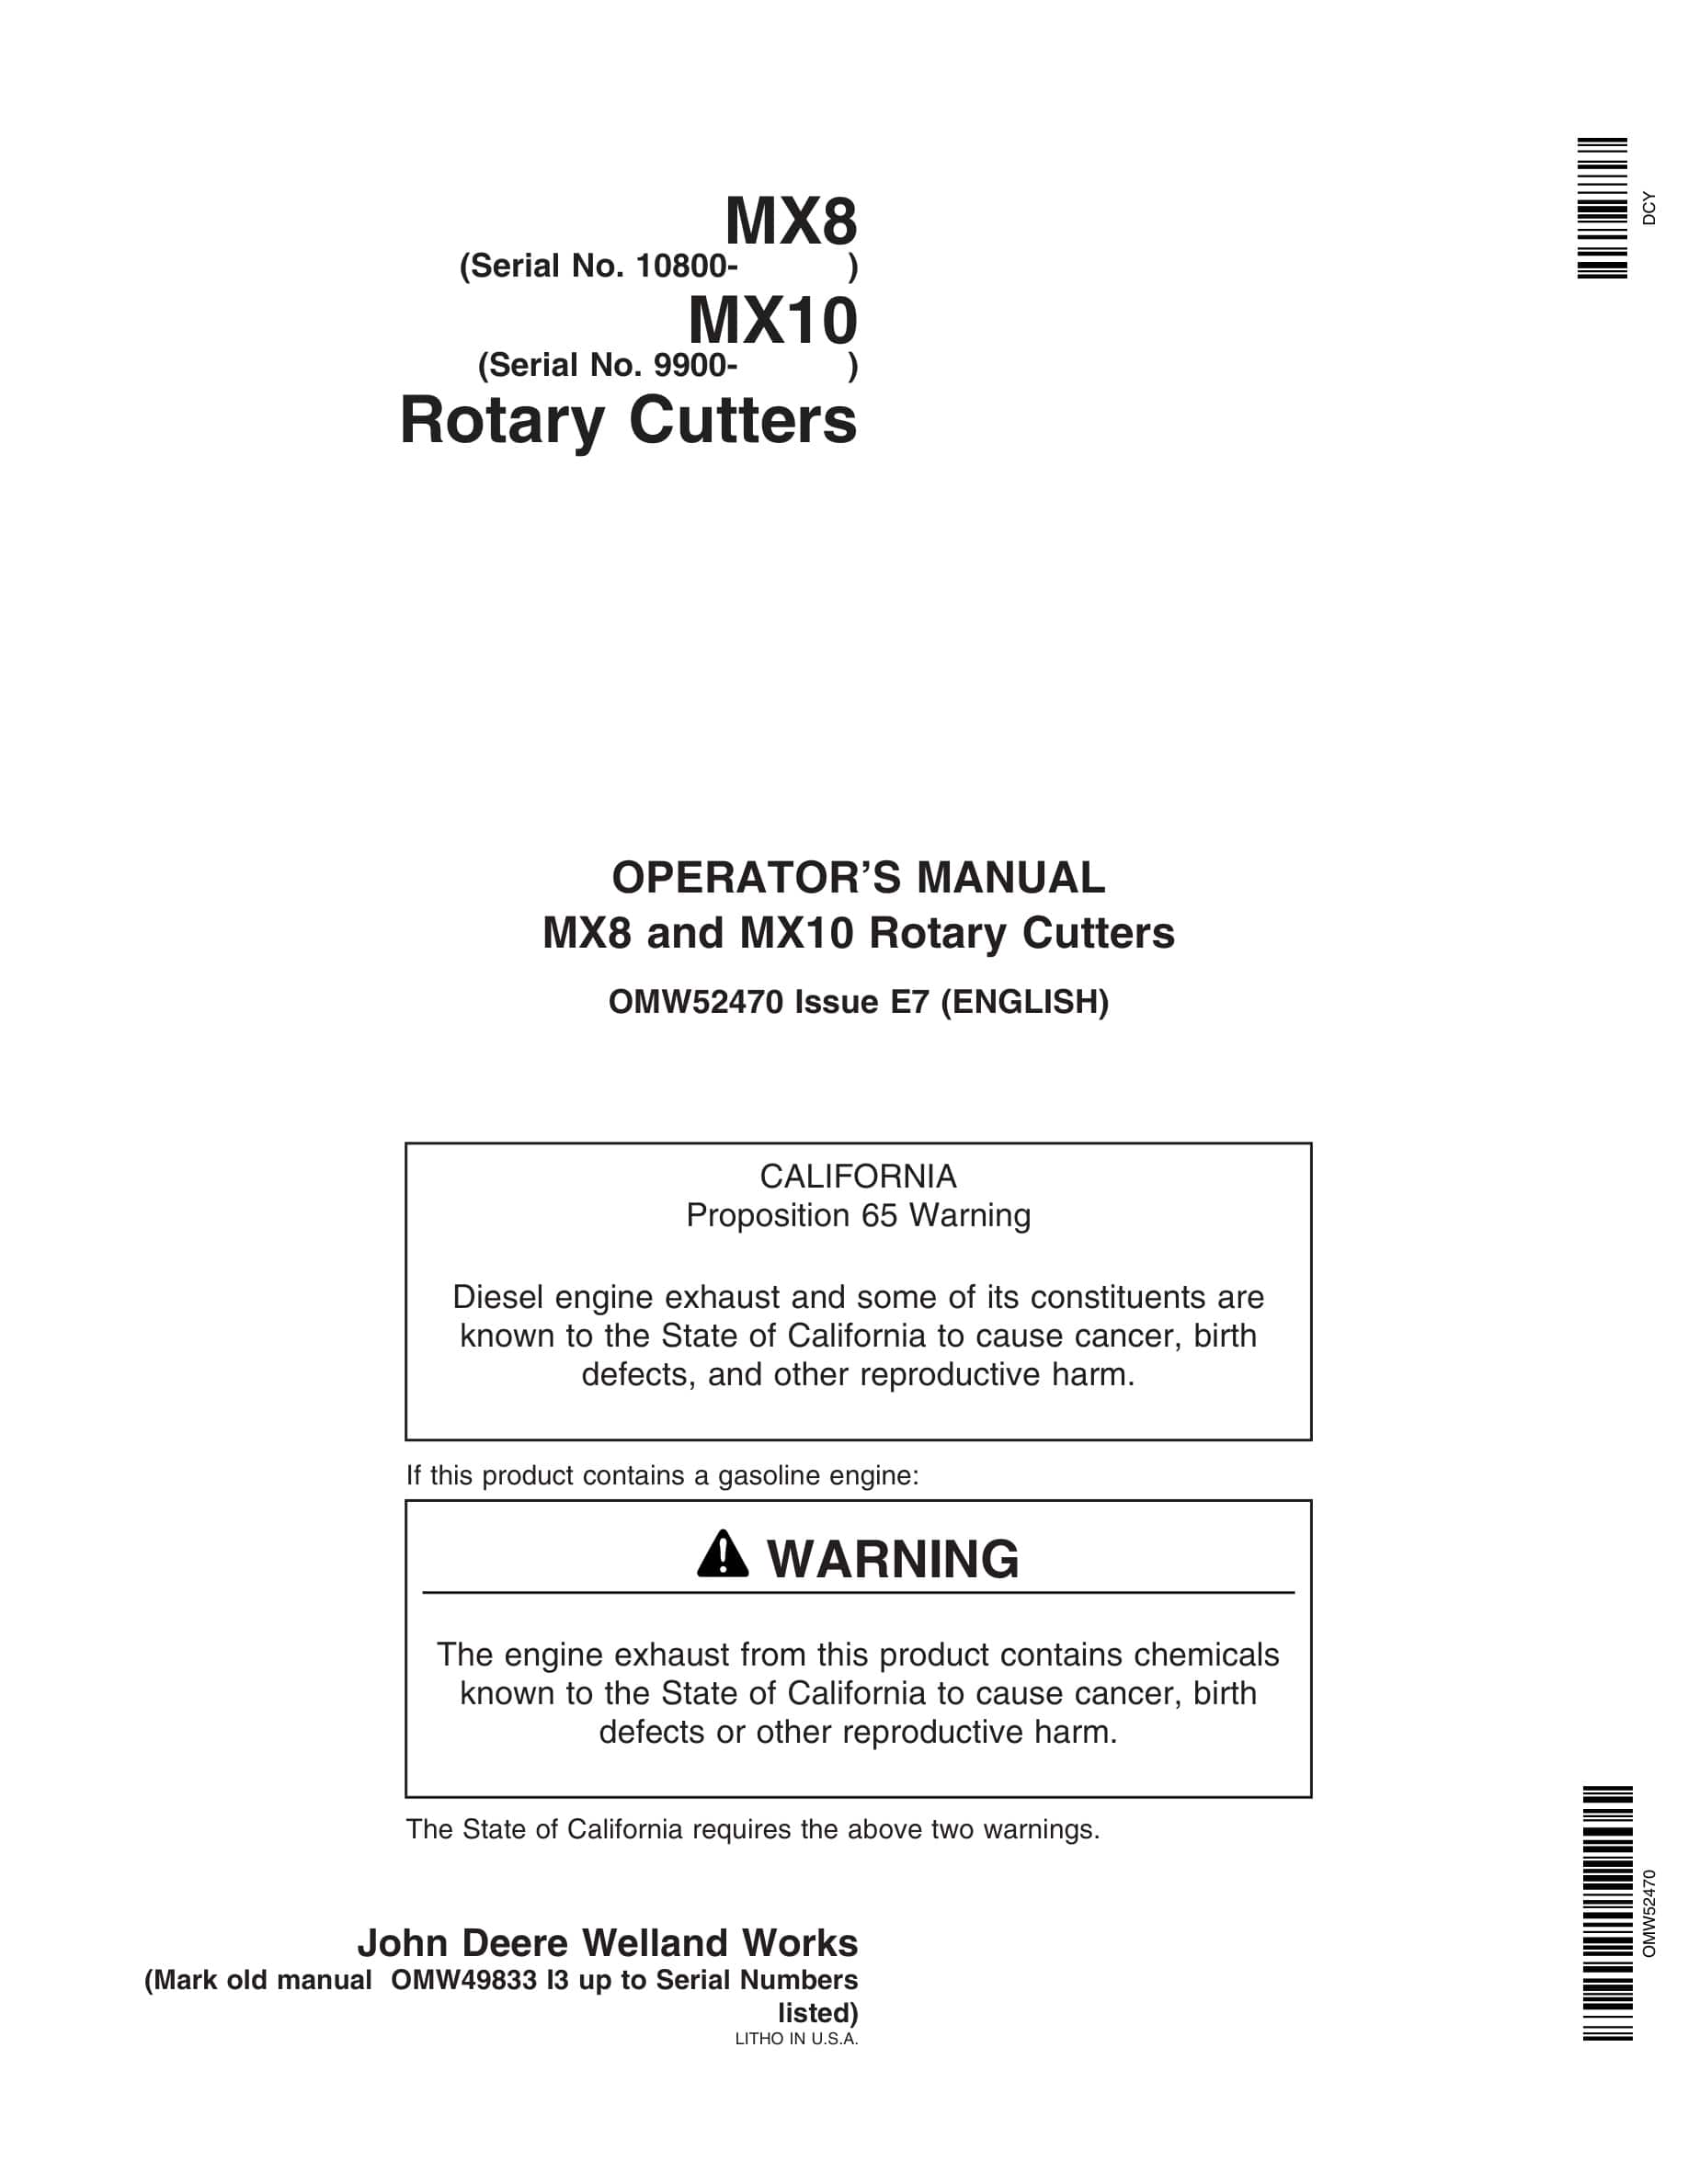 John Deere MX8 and MX10 Rotary Cutter Operator Manual OMW52470-1